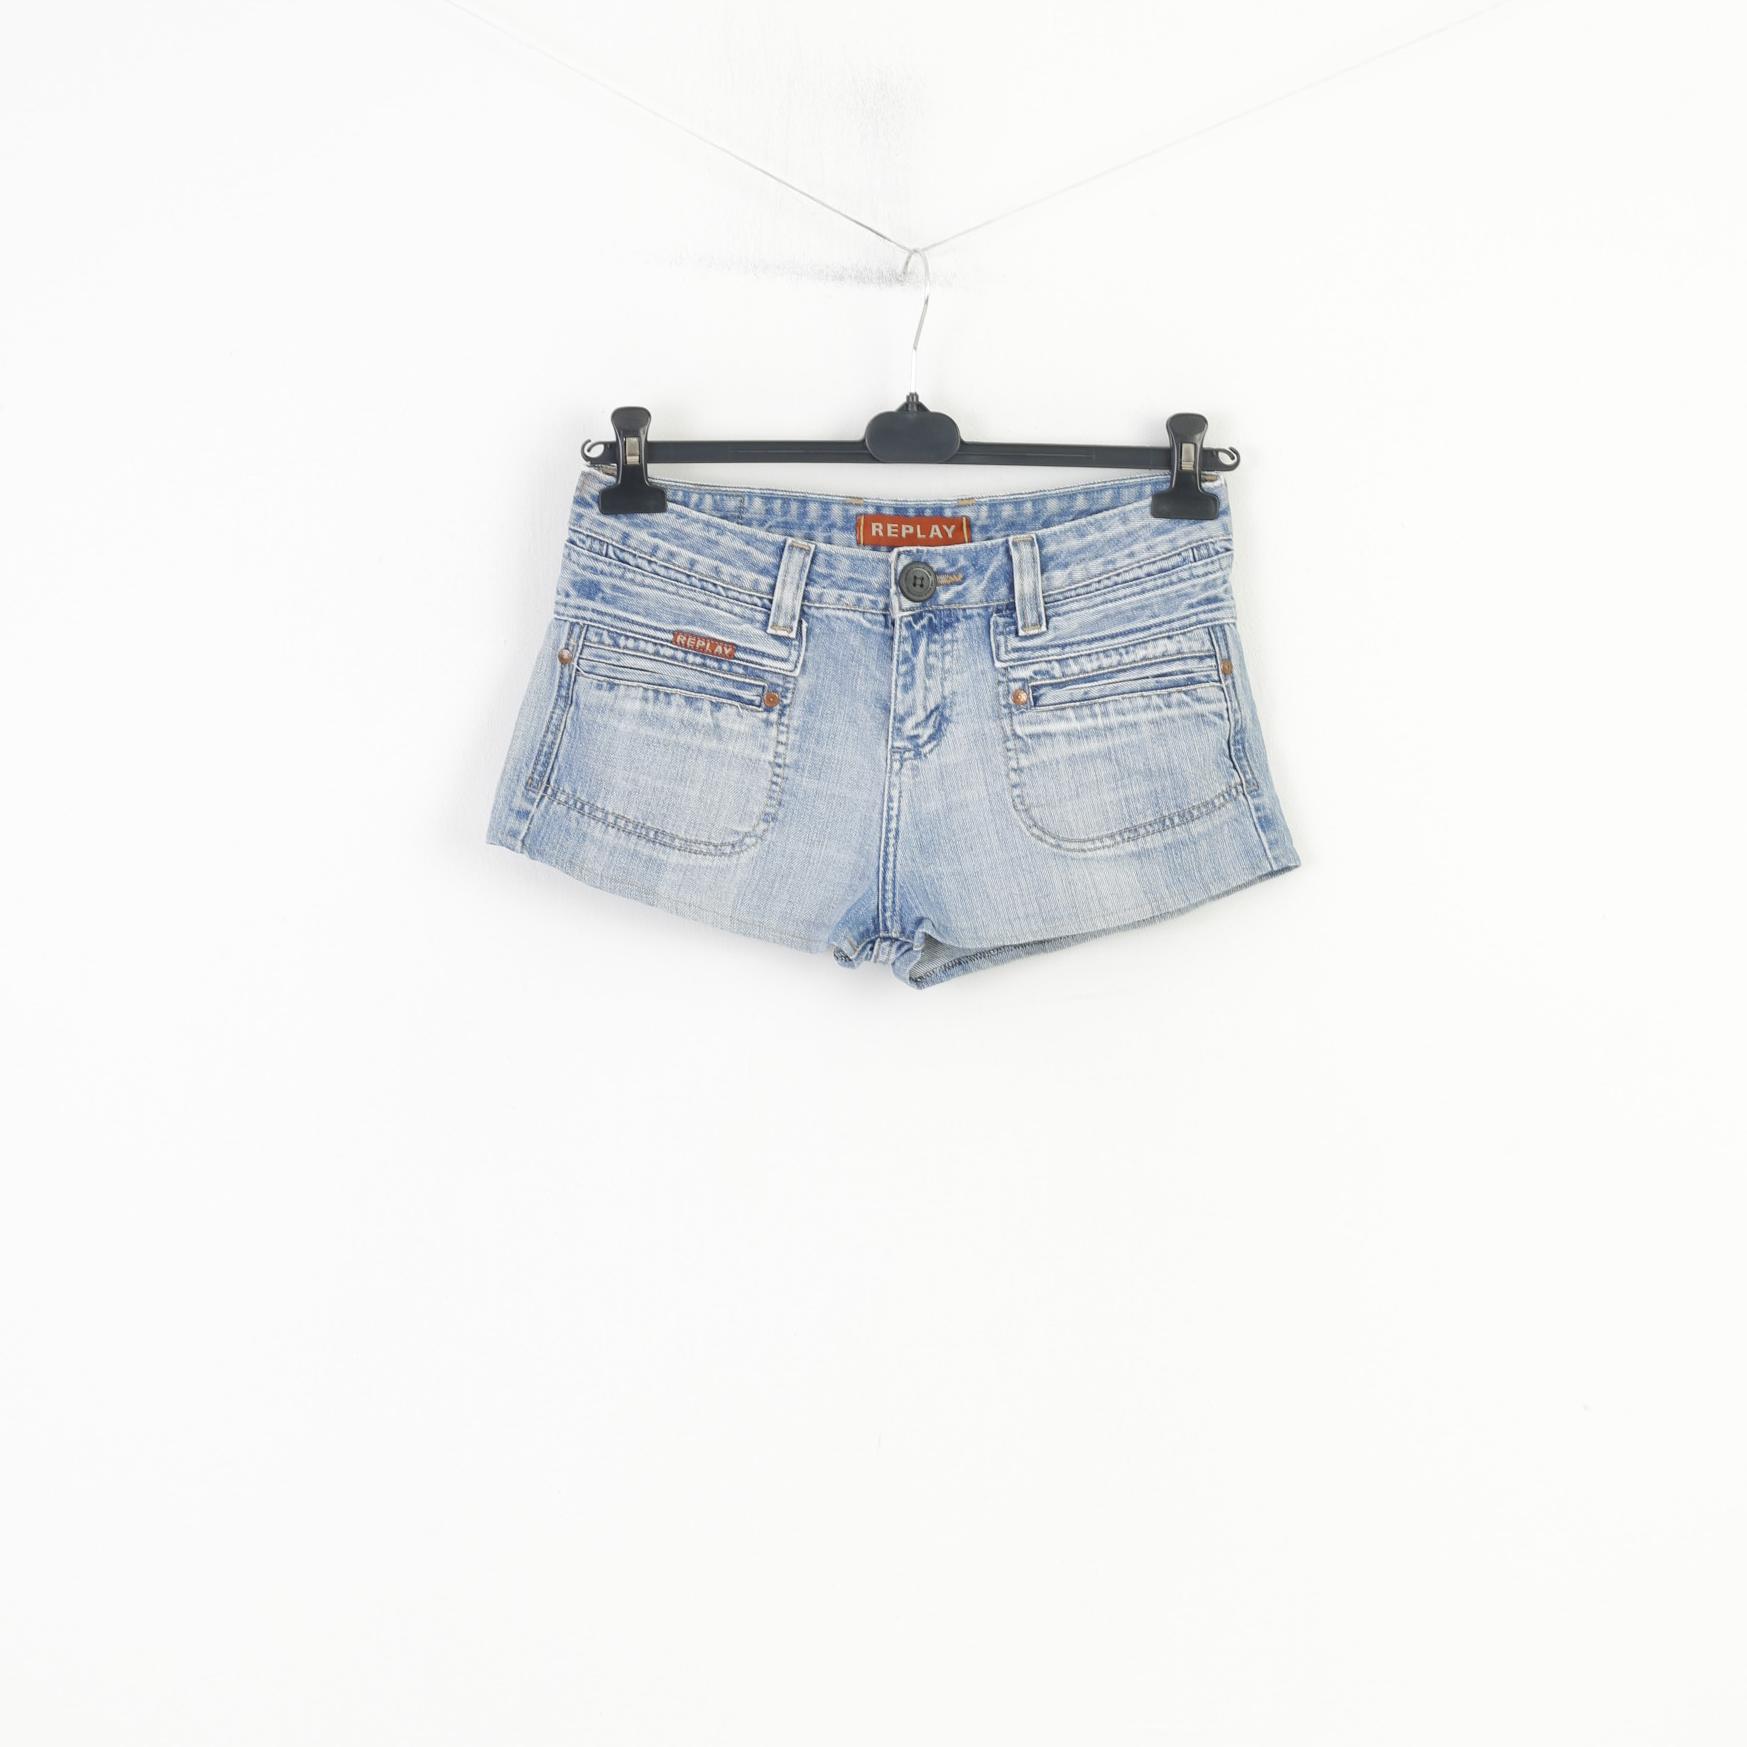 Replay Woman 30 Shorts Jeans Denim Summer Pockets Cotton Pants